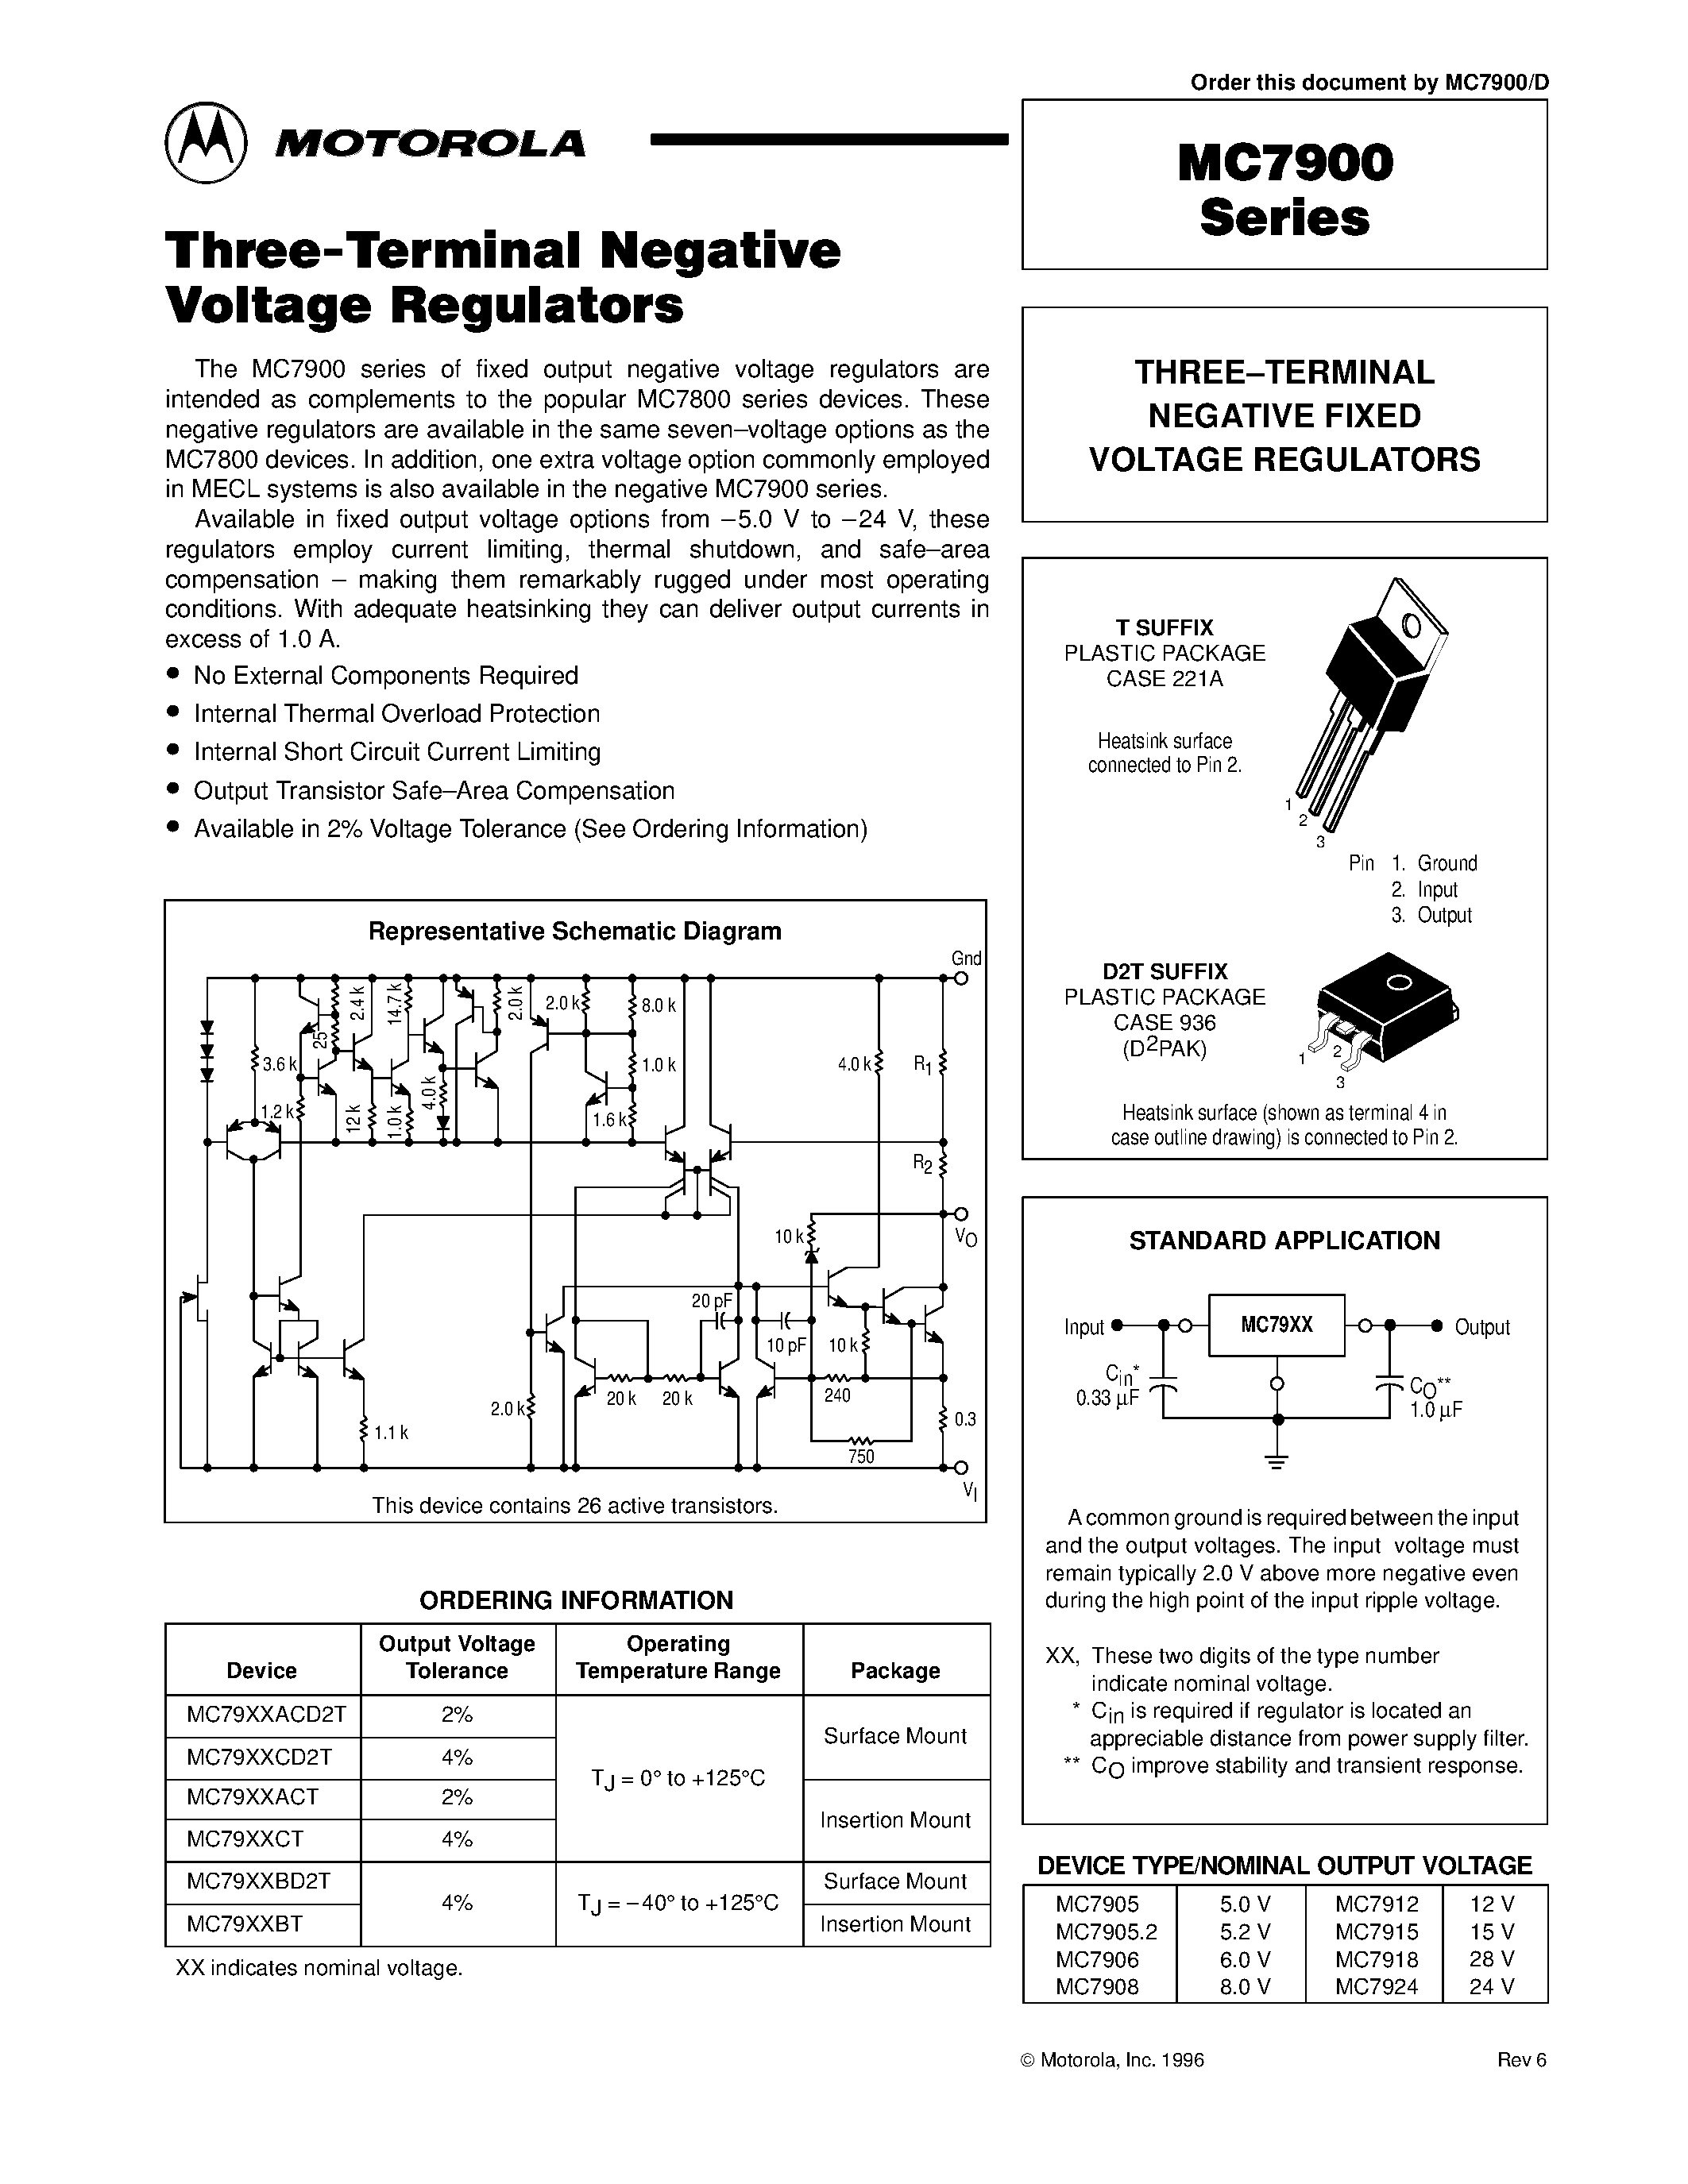 Datasheet MC7906CD2T - THREE-TERMINAL NEGATIVE FIXED VOLTAGE REGULATORS page 1